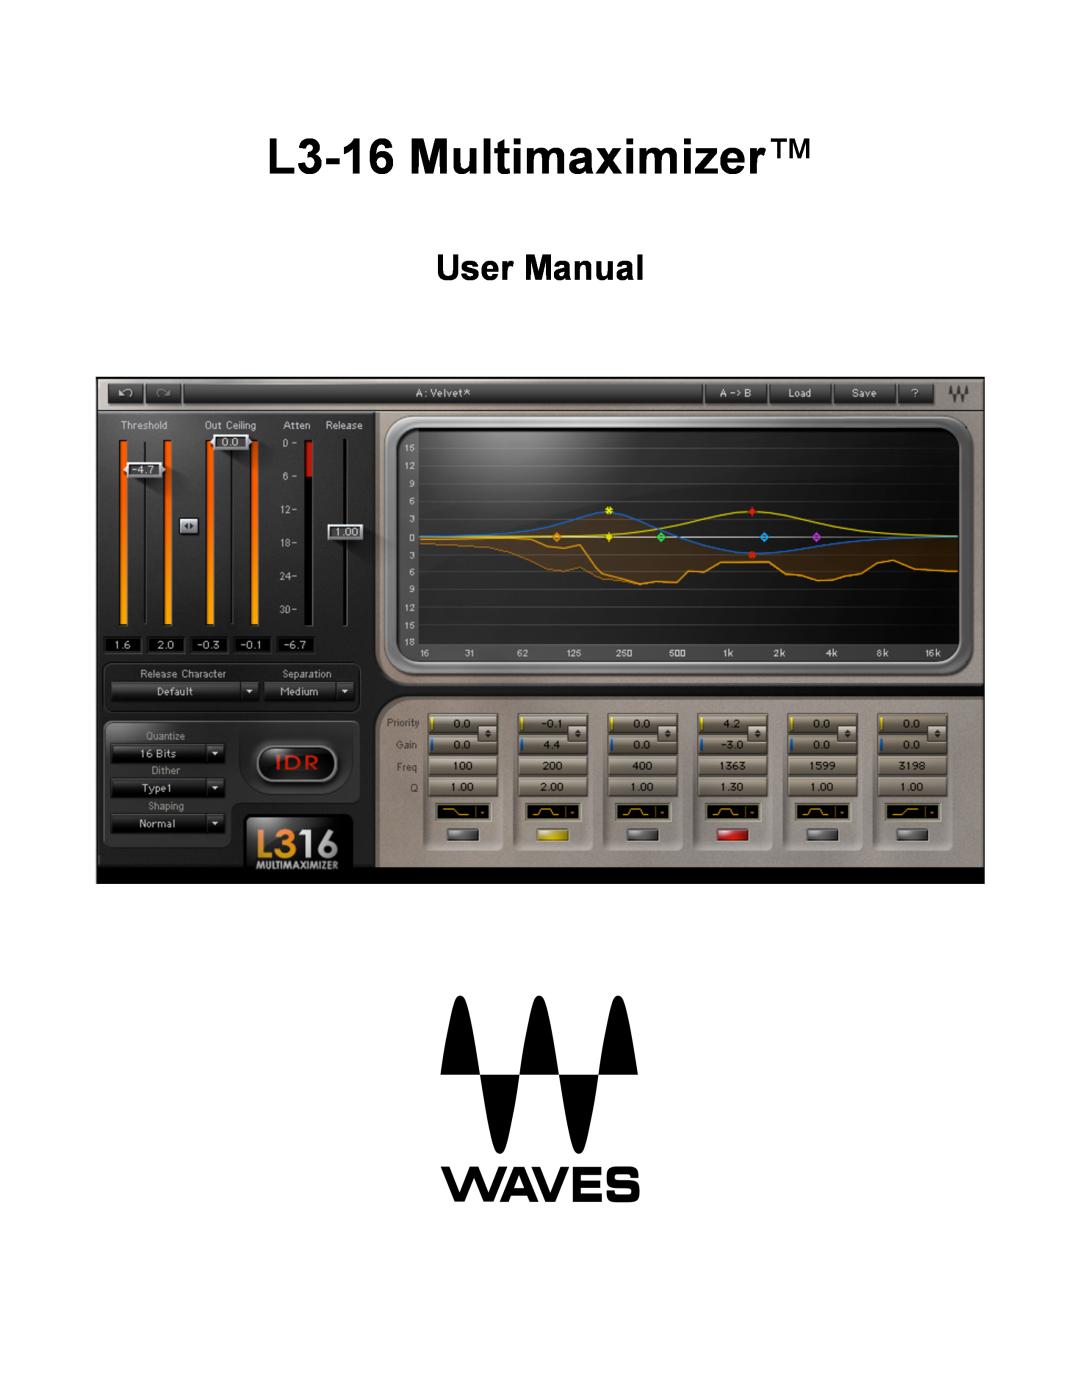 Waves user manual L3-16Multimaximizer 